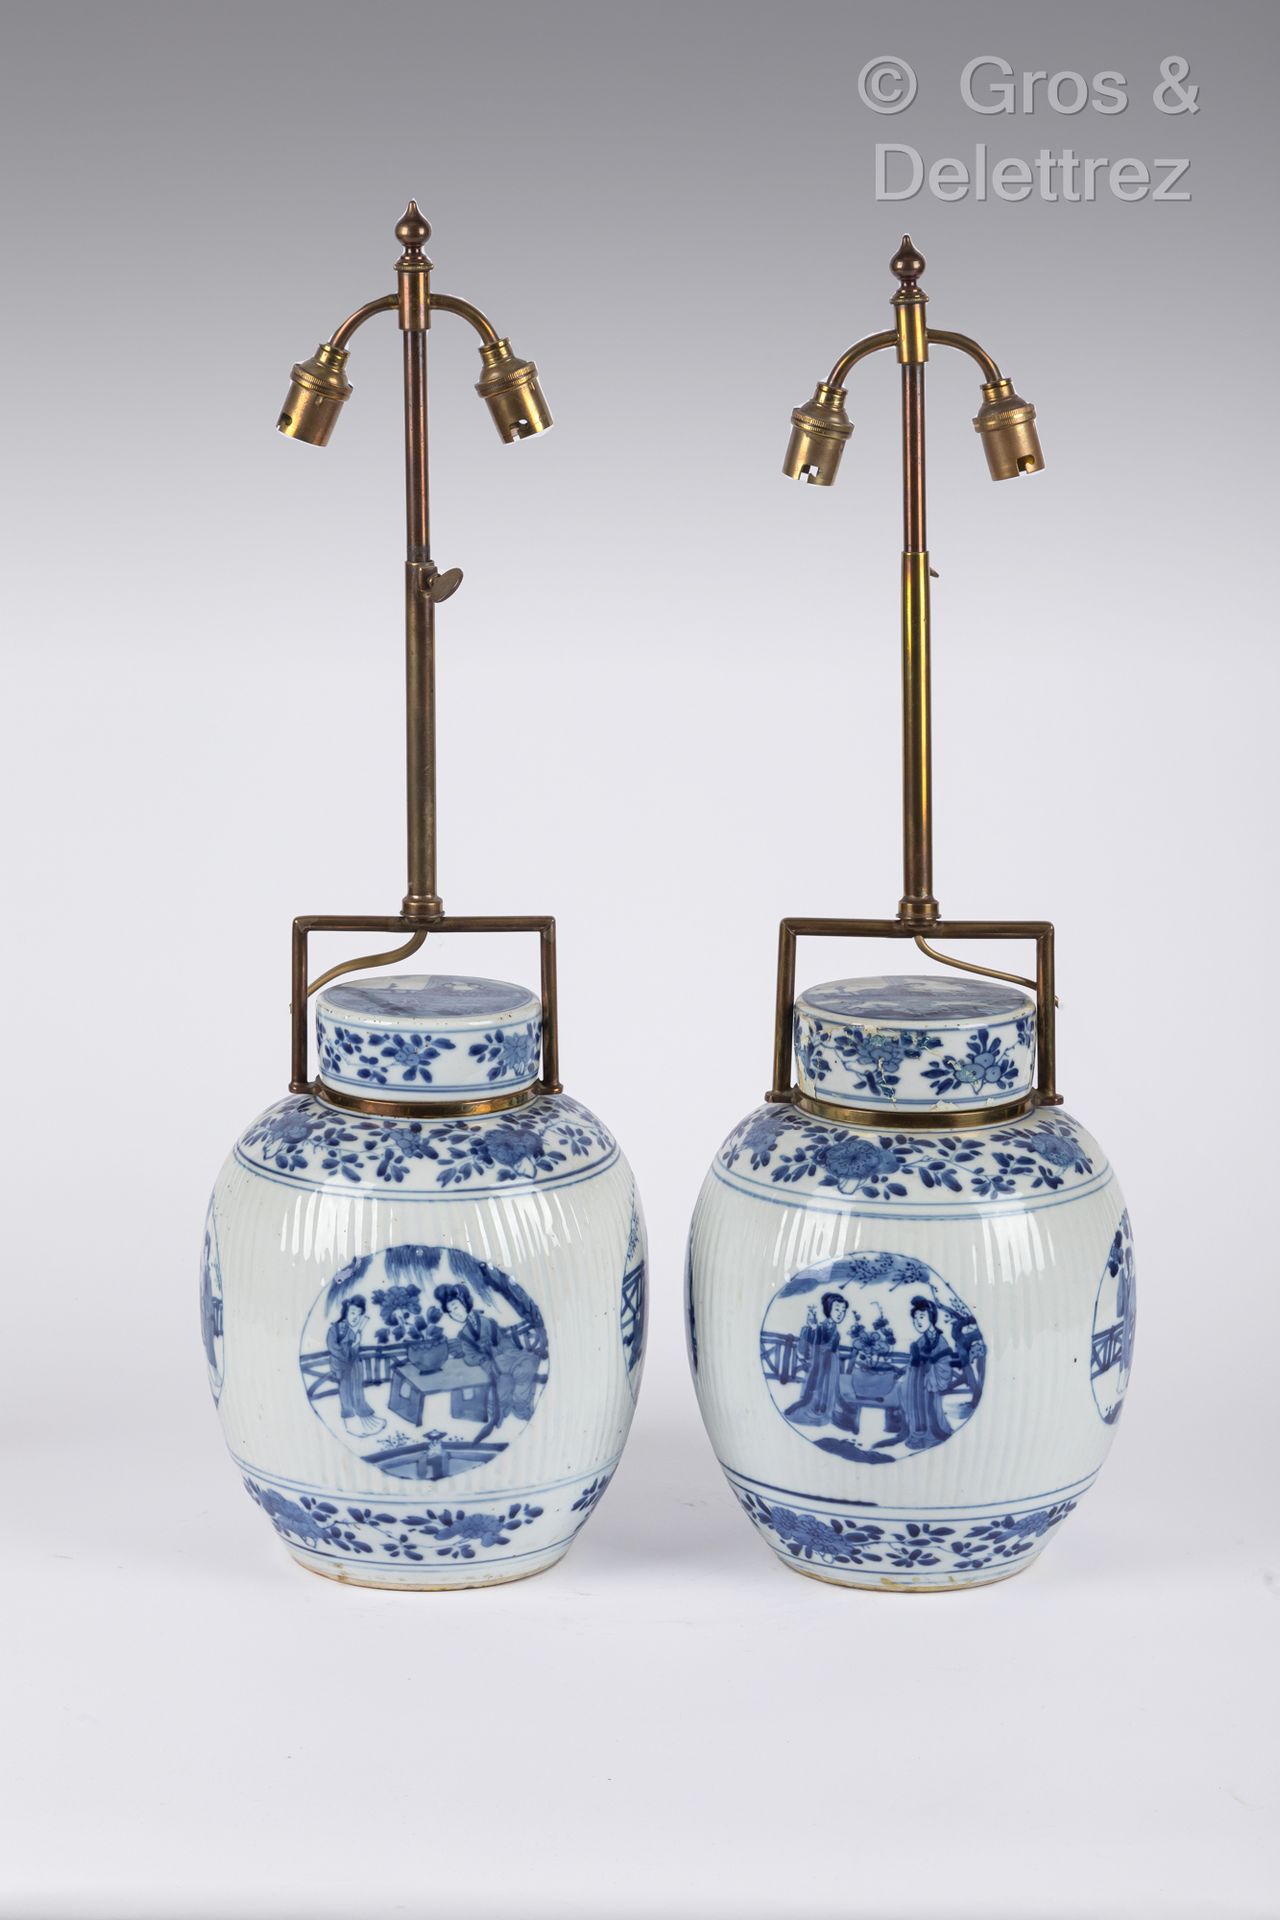 Null CHINA, periodo Kangxi (1662-1722)
Pareja de vasijas de porcelana azul y bla&hellip;